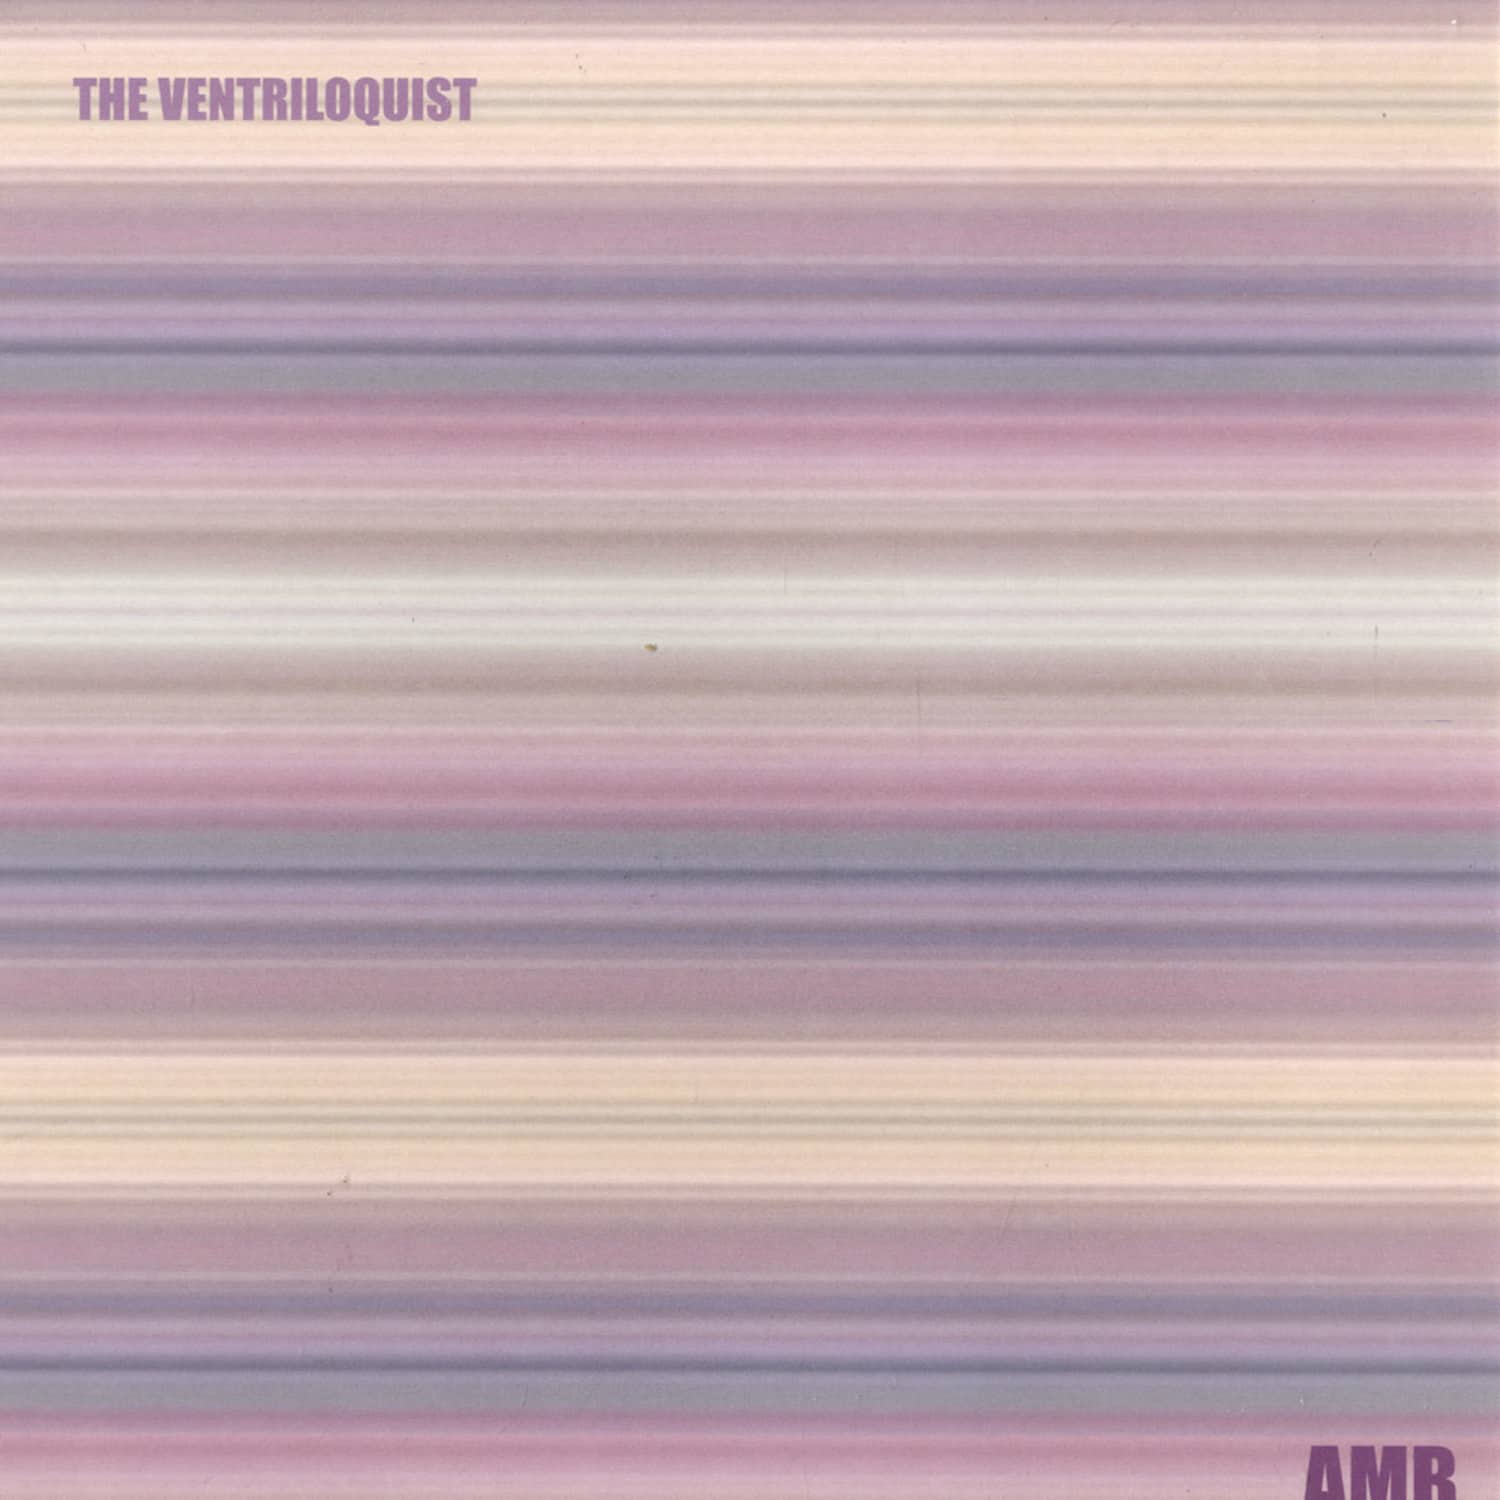 The Ventriloquist - AMB.